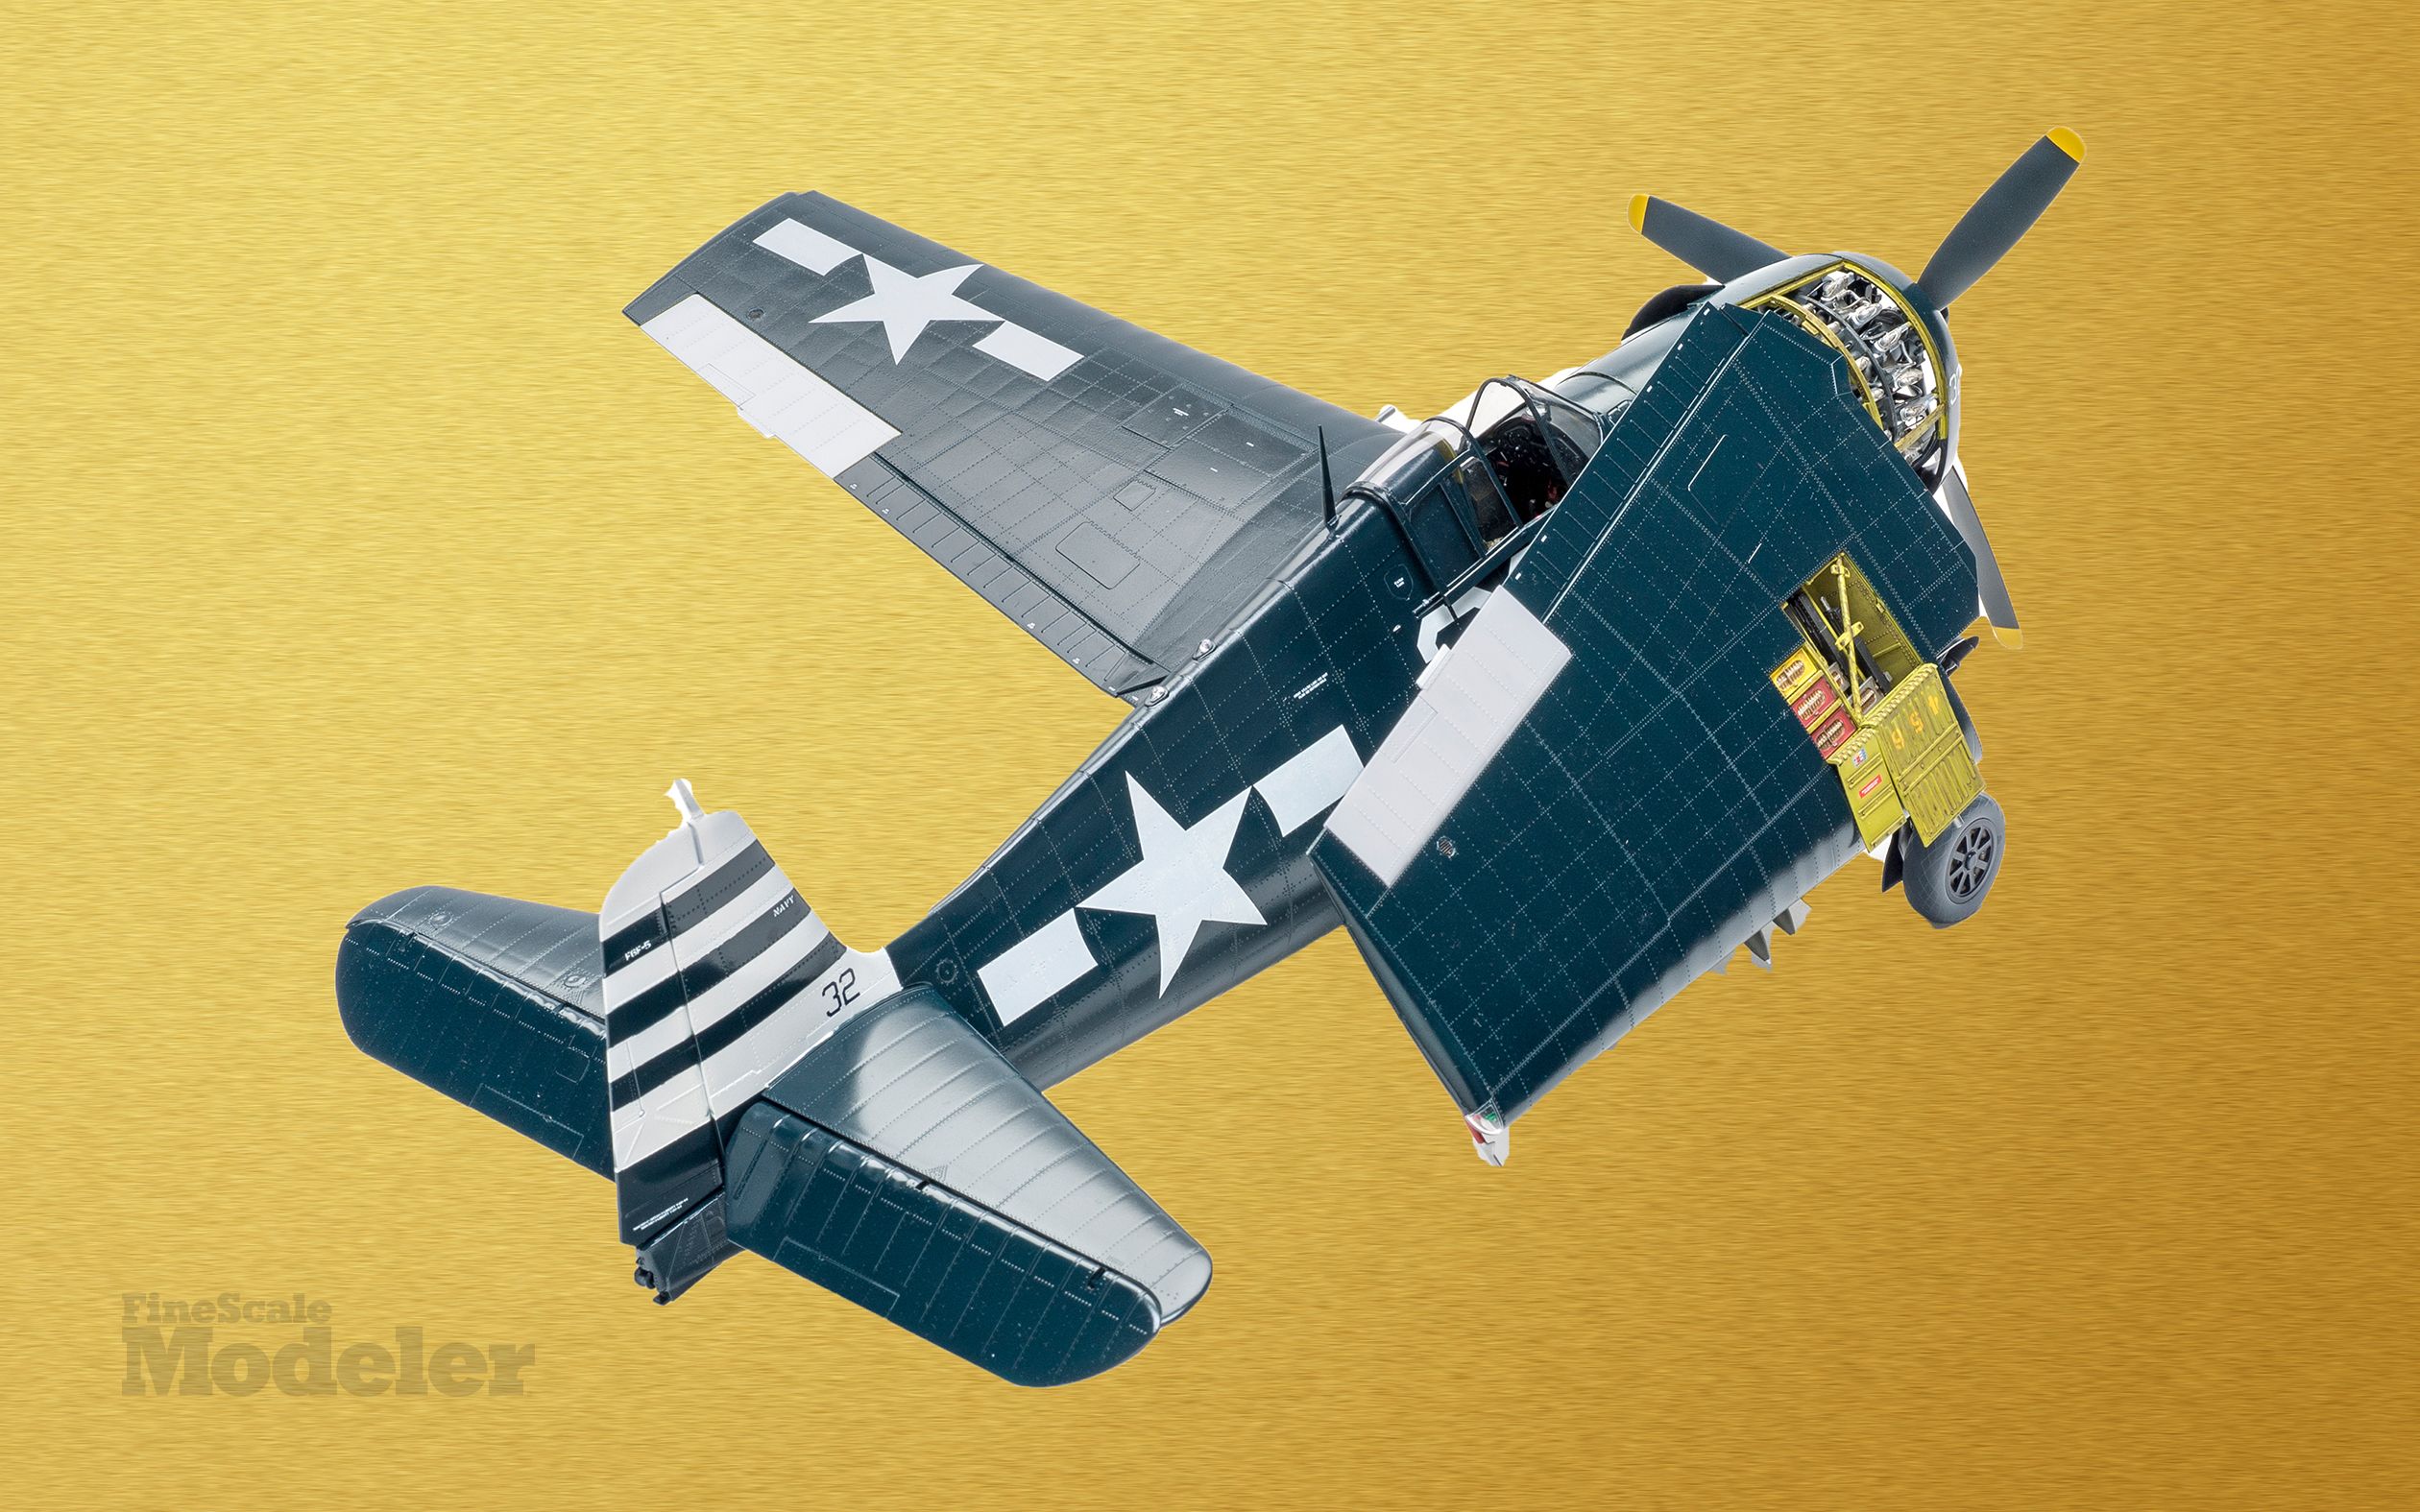 Free Wallpaper Of Airfix Grumman F6F 5 Hellcat. FineScale Modeler Magazine